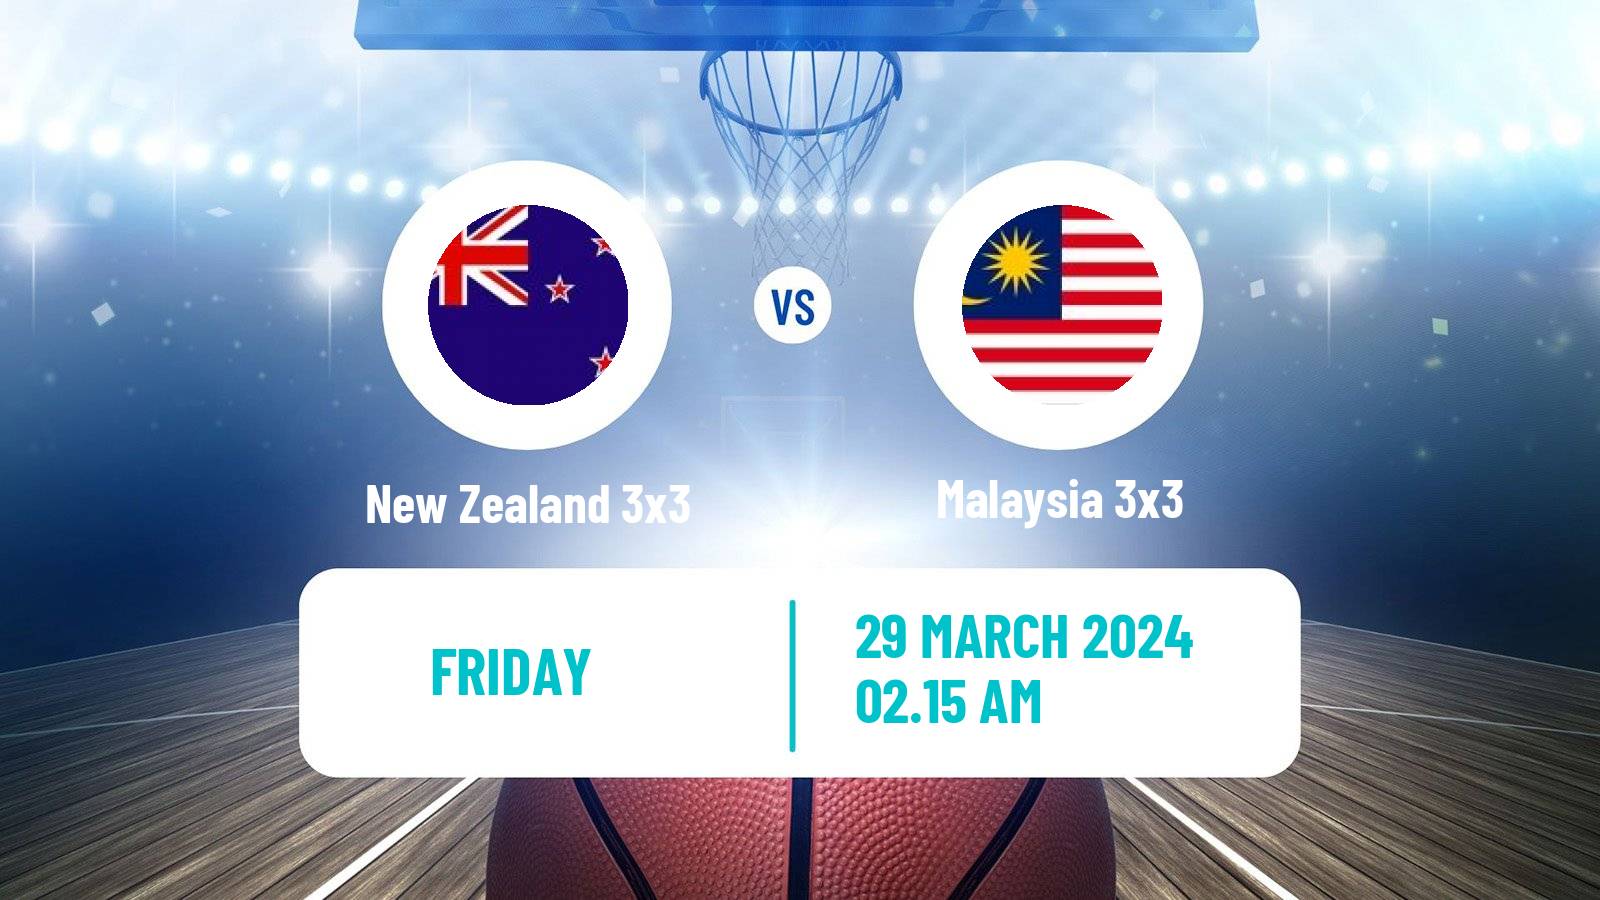 Basketball Asia Cup 3x3 New Zealand 3x3 - Malaysia 3x3